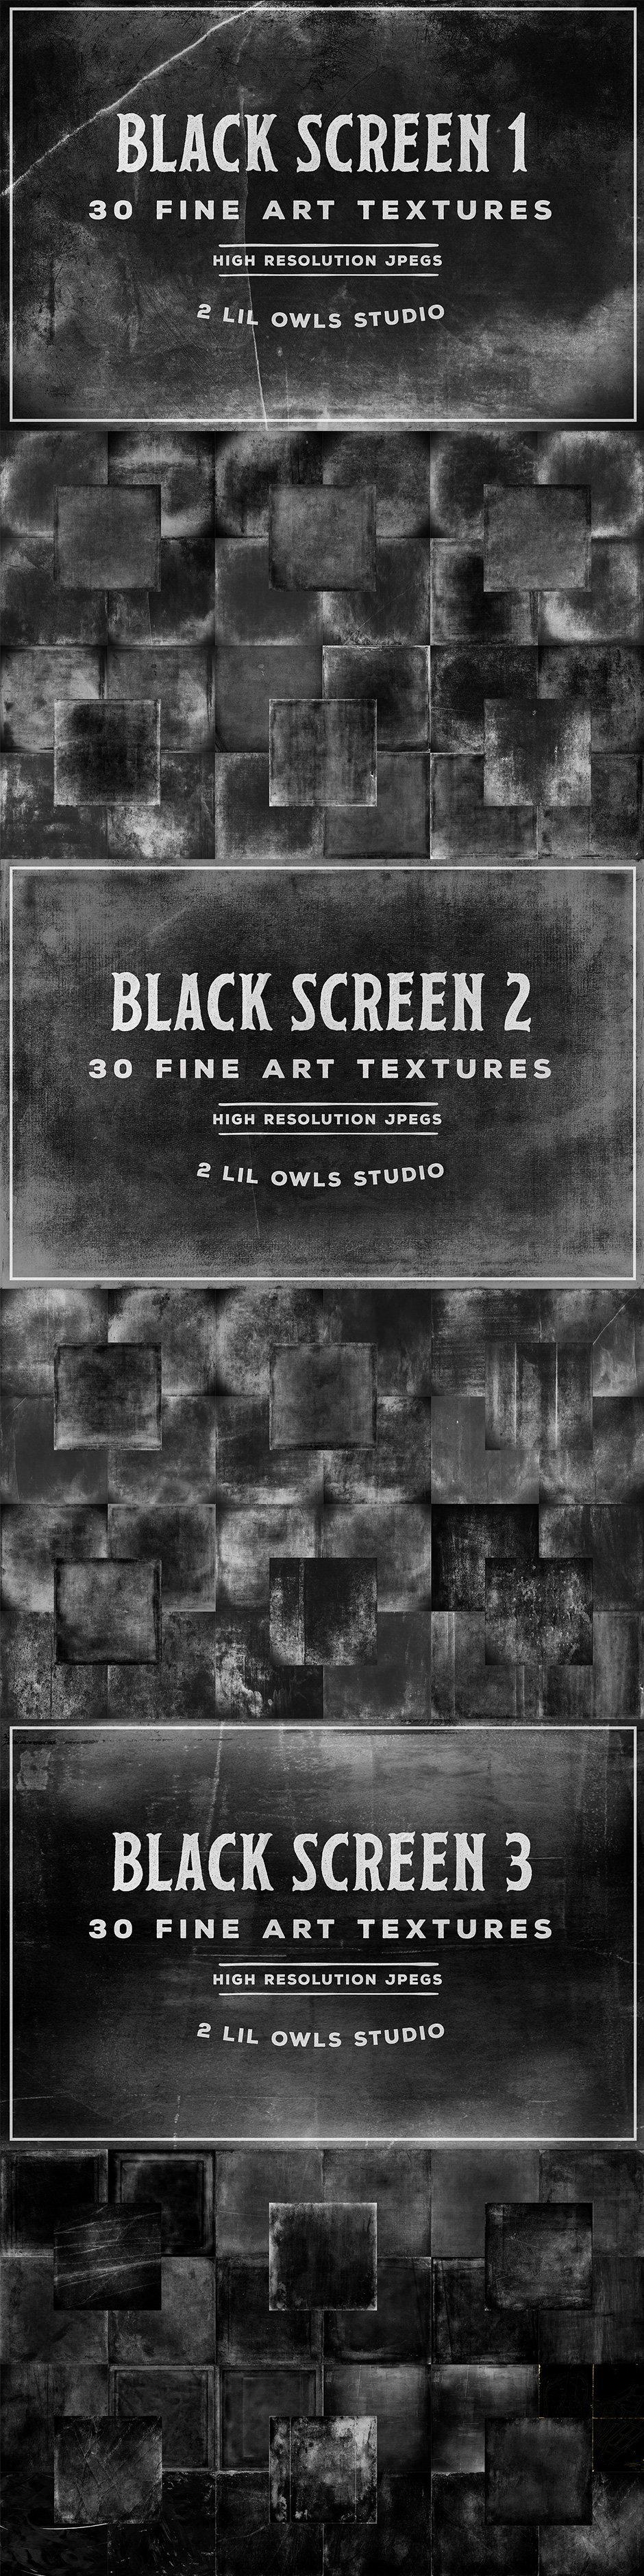 Black Screen Textures Bundle